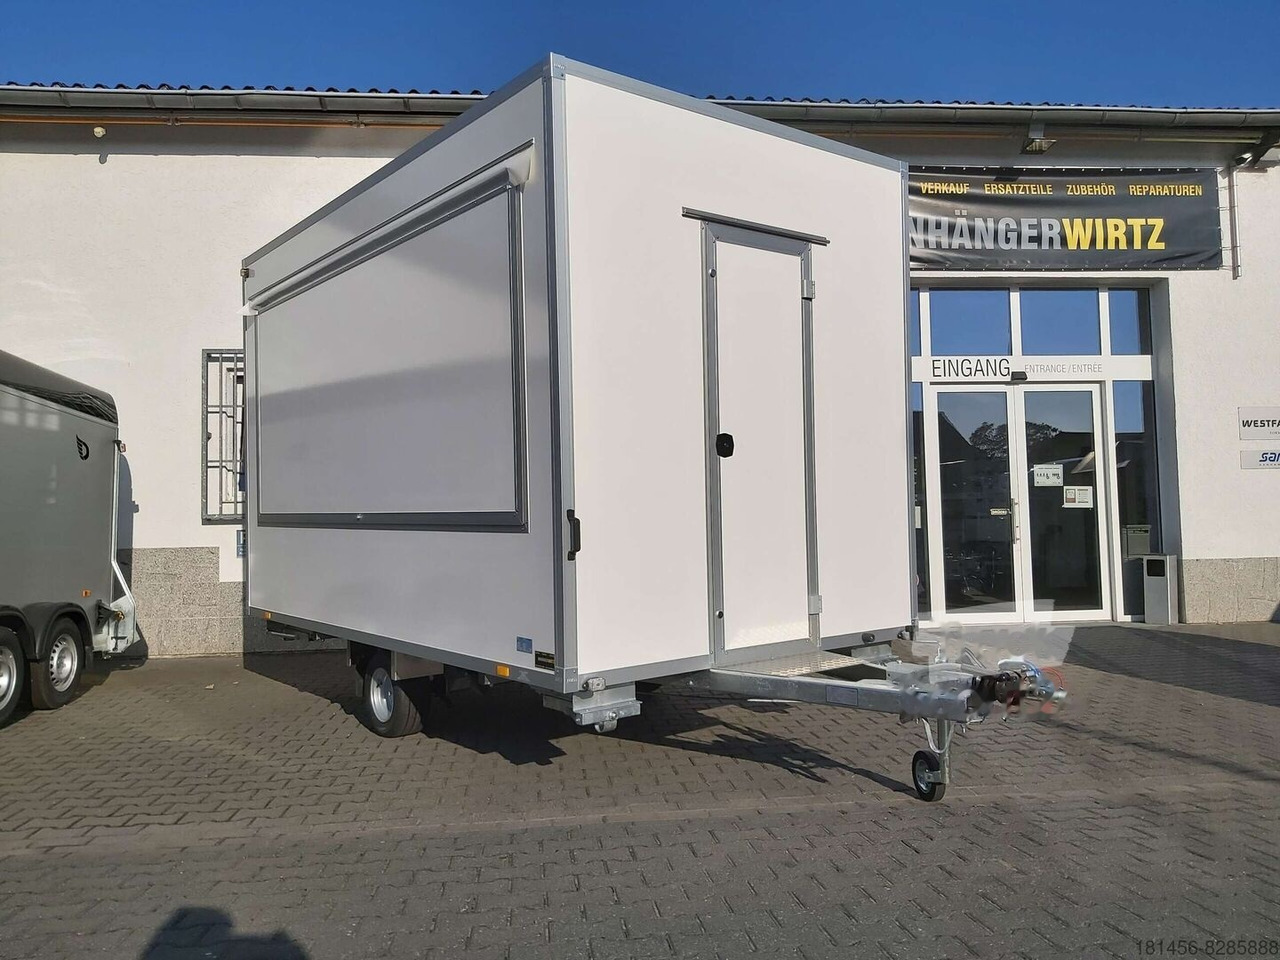 New Vending trailer Wm Meyer VKH 1337 Verkaufsklappe Boden eben isoliert direkt bei ANHÄNGERWIRTZ verfügbar: picture 11